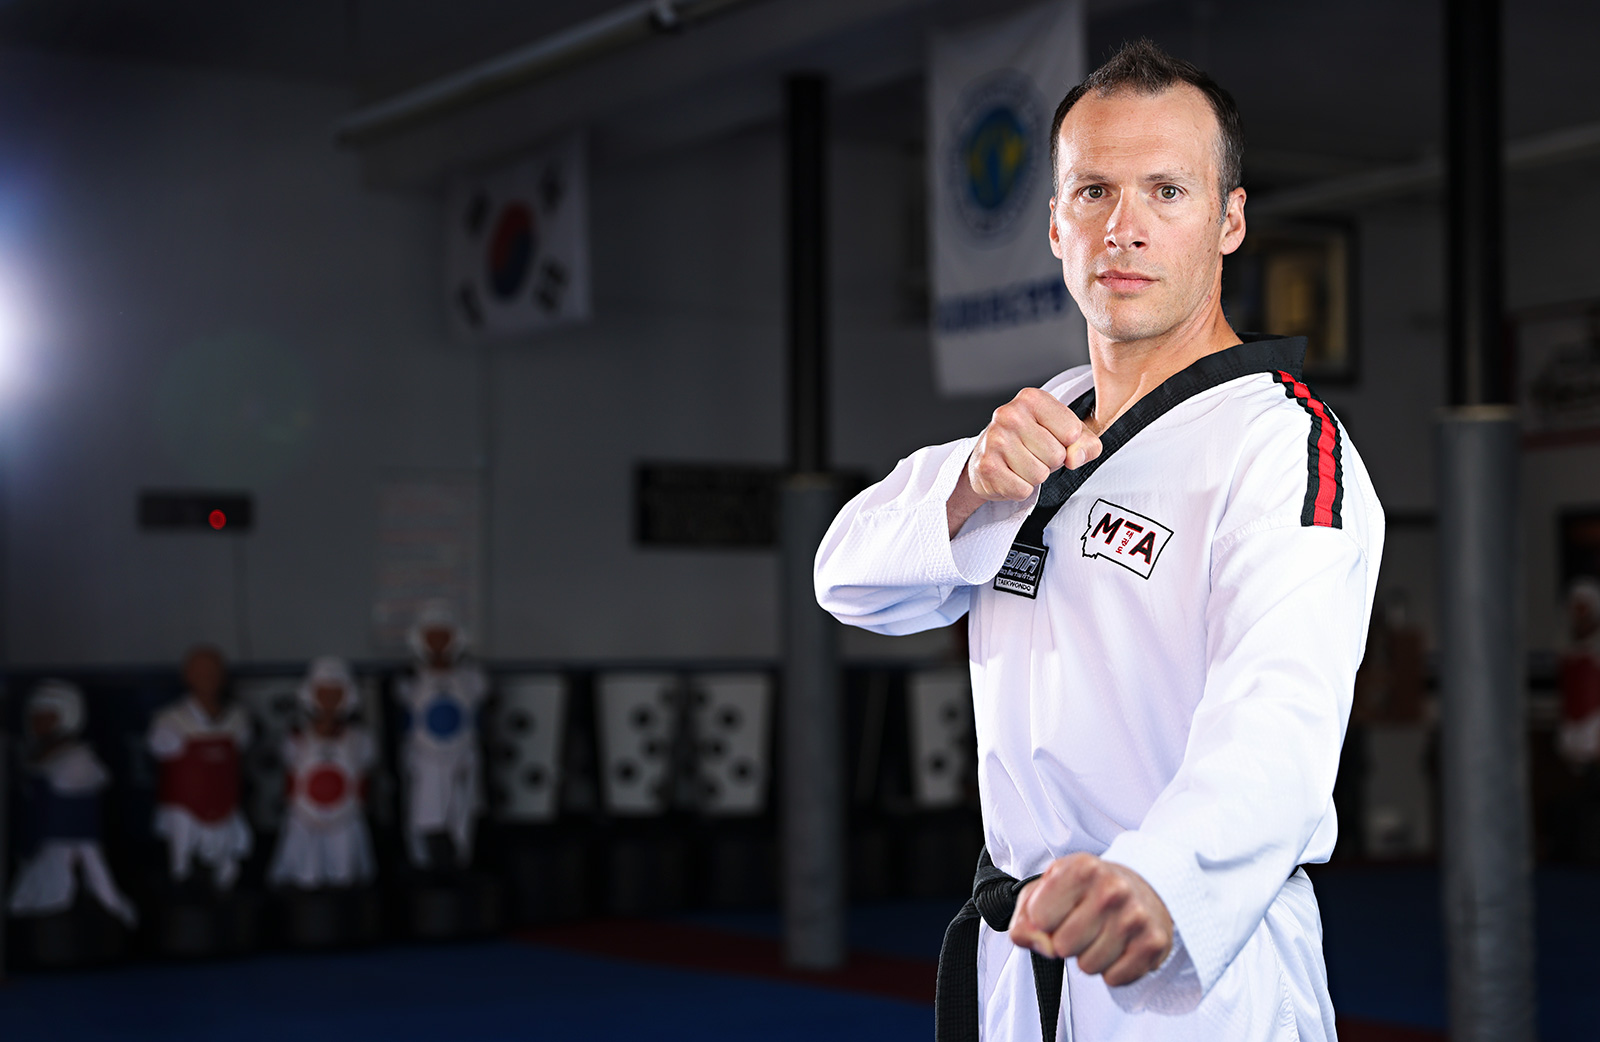 AAU National Taekwondo Champion Trevor Eagleton